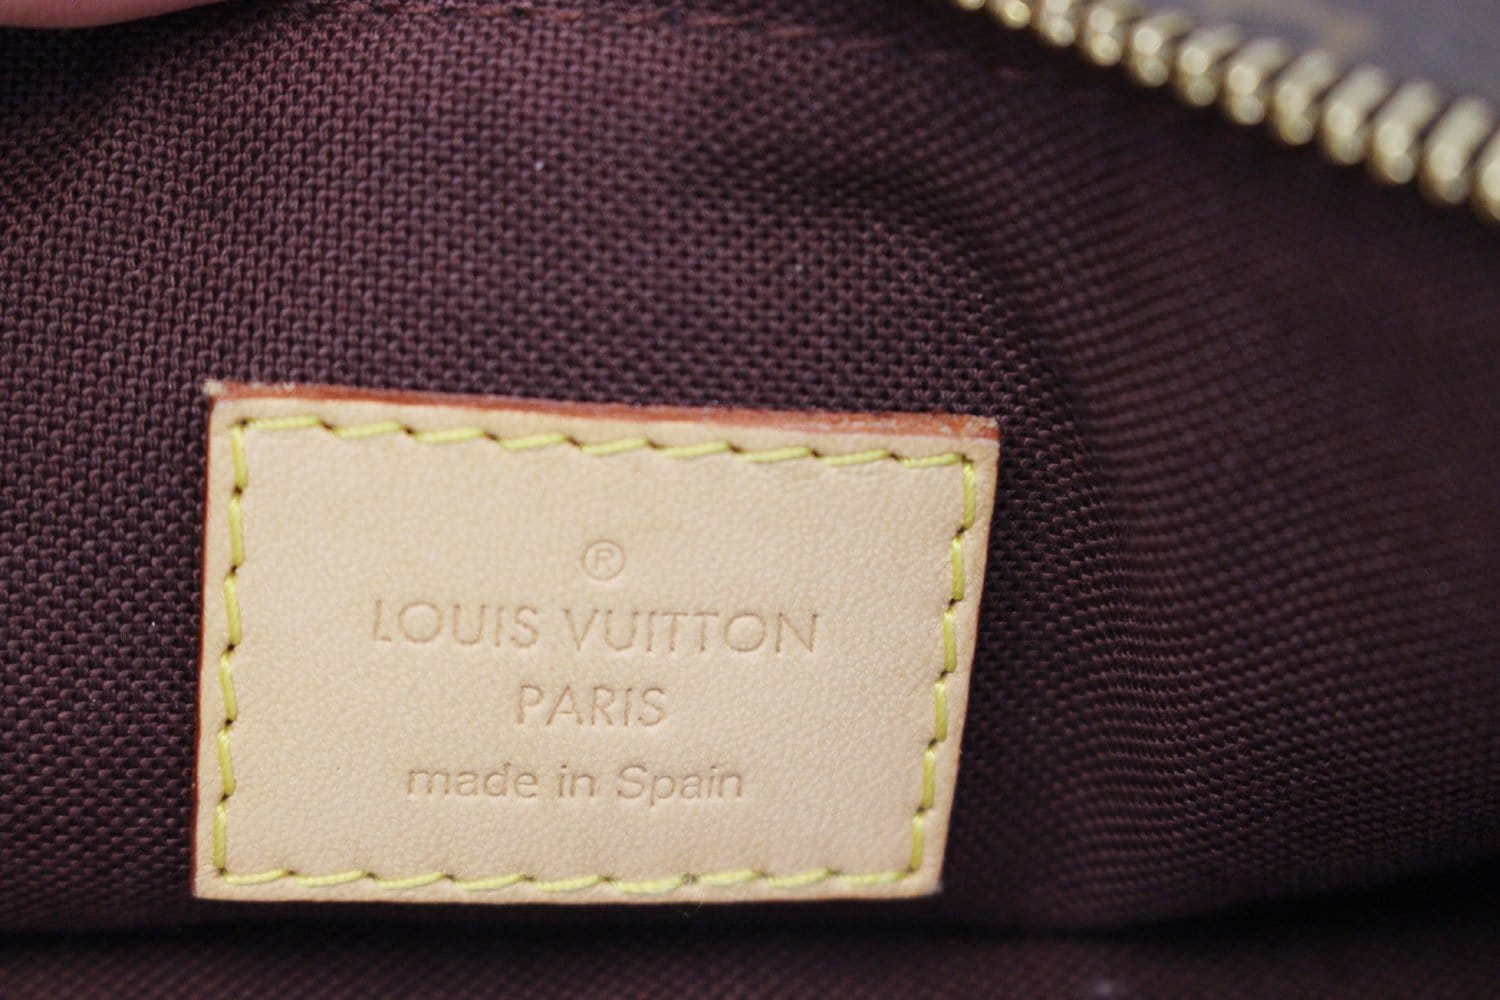 Louis Vuitton Monogram Canvas Mabillon Shoulder Bag at Jill's Consignment